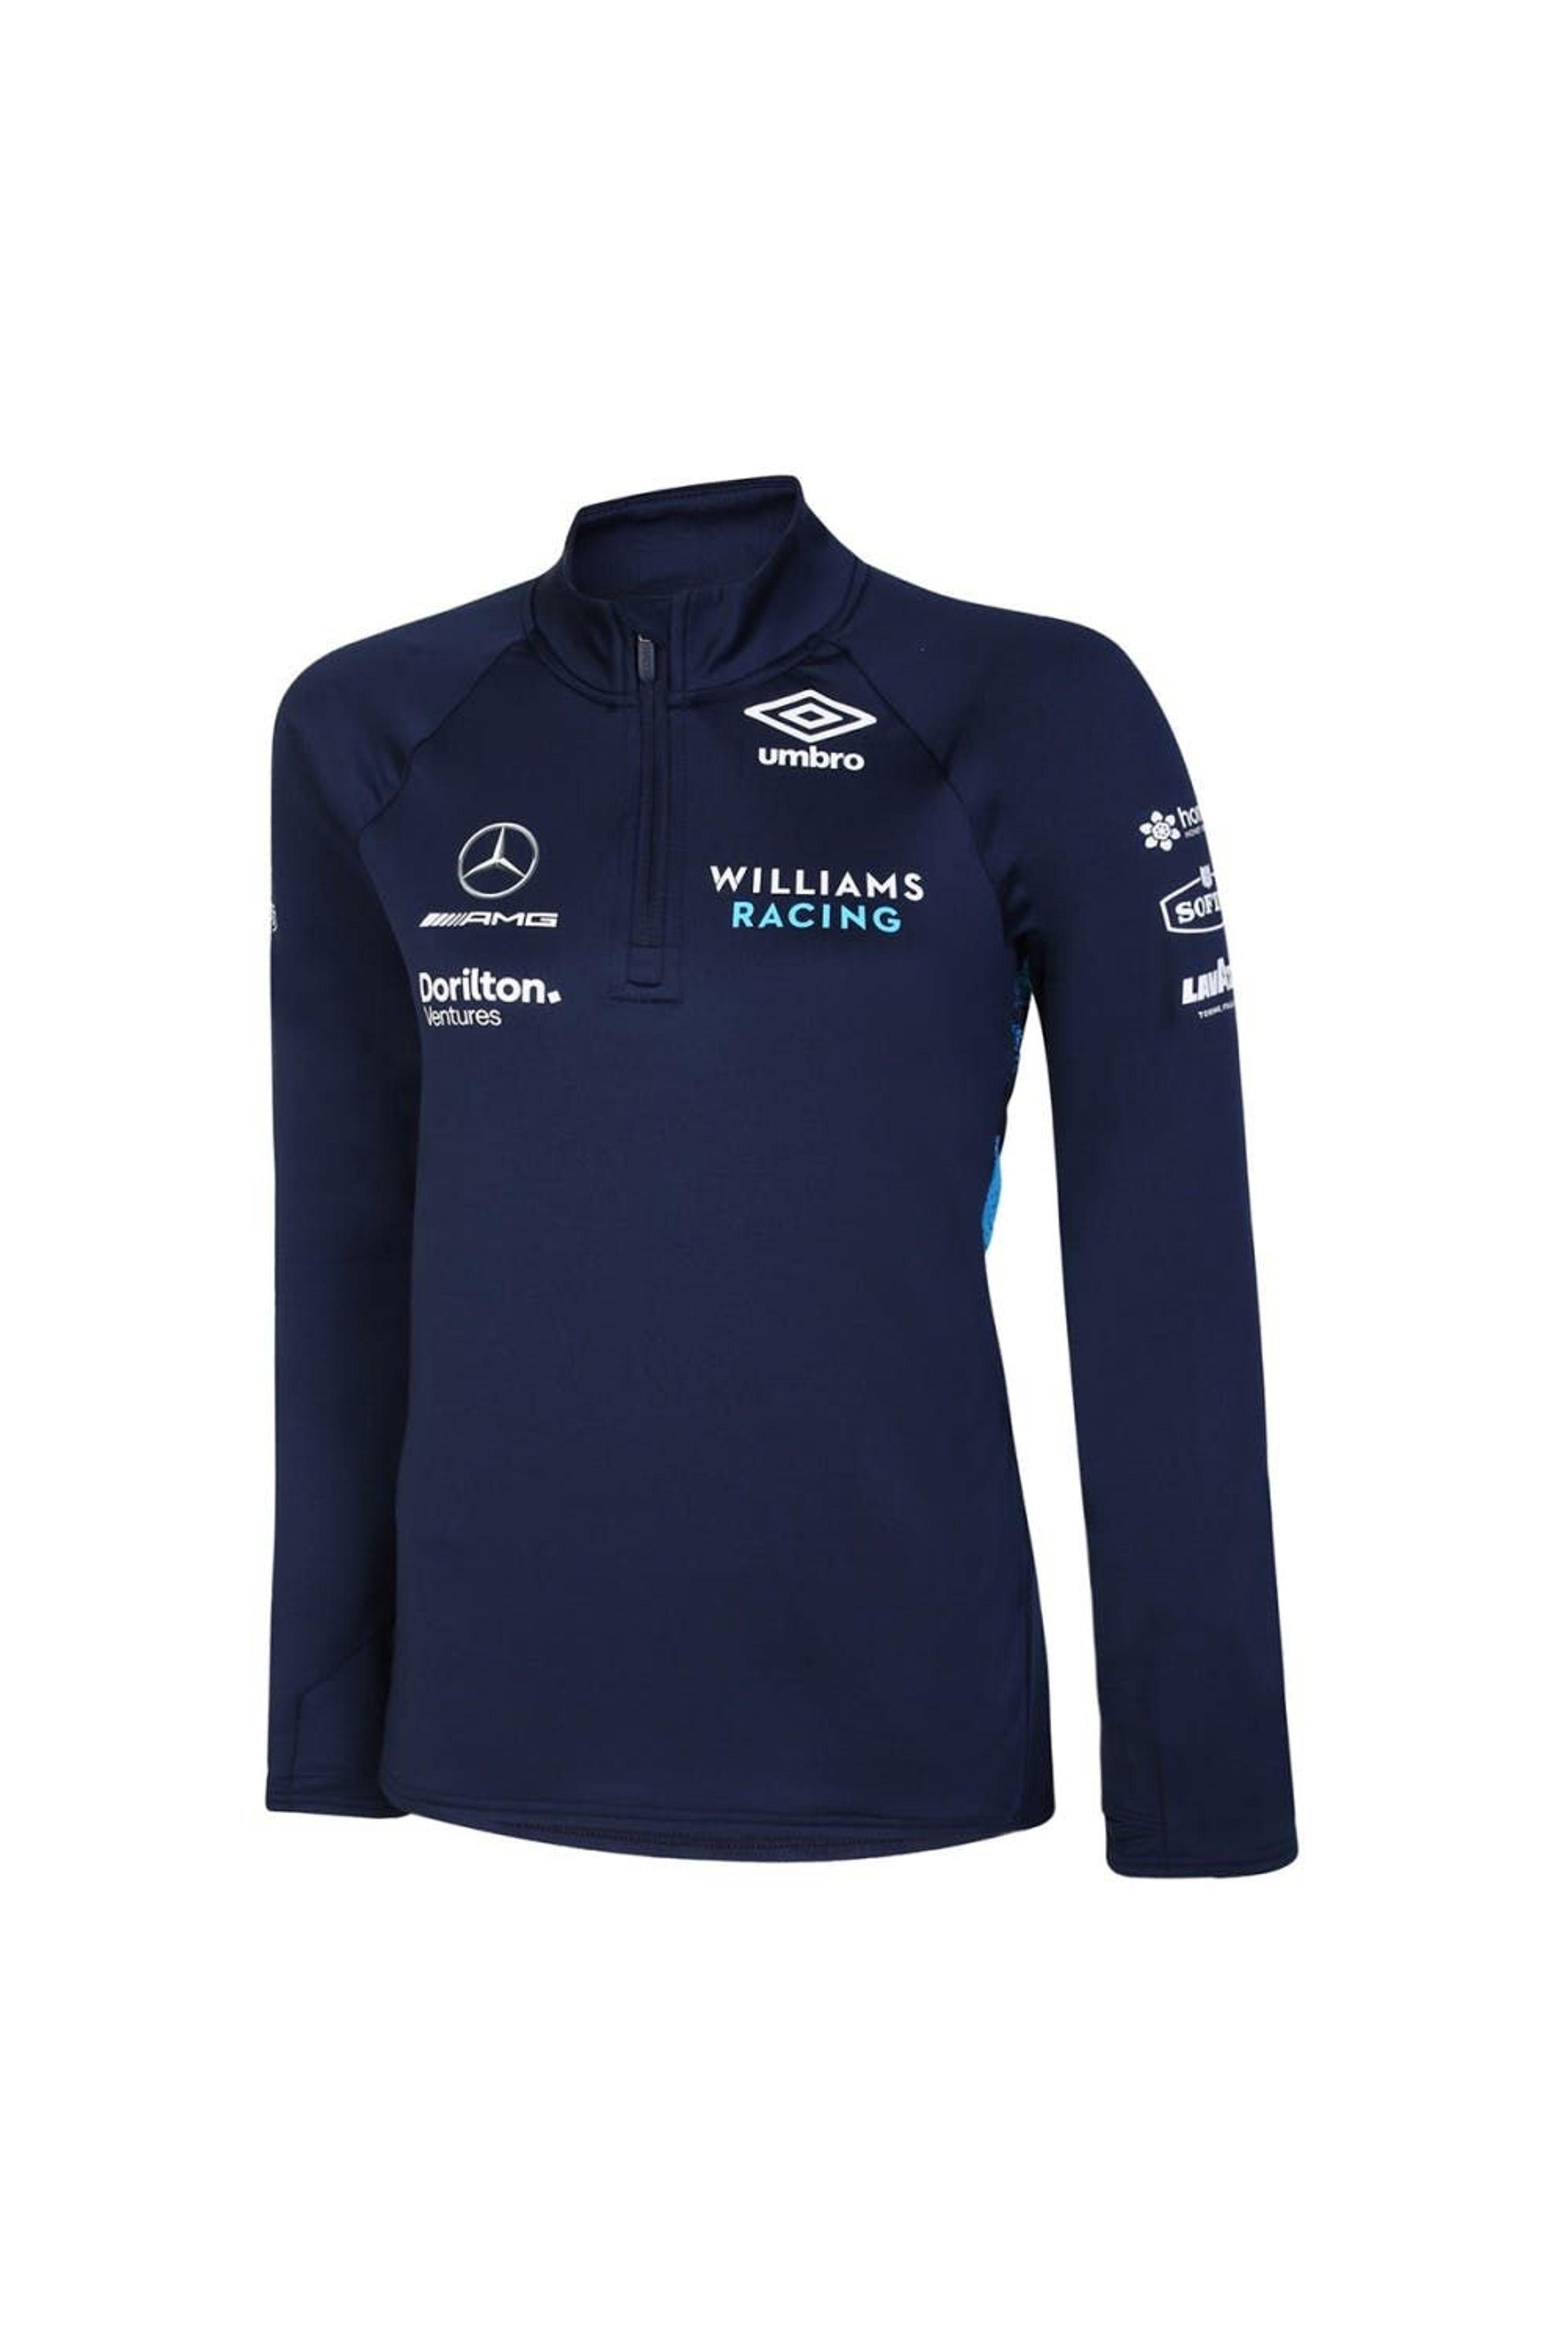 Umbro Williams Racing ́22 Racing Midlayer T-shirt in Blue | Lyst